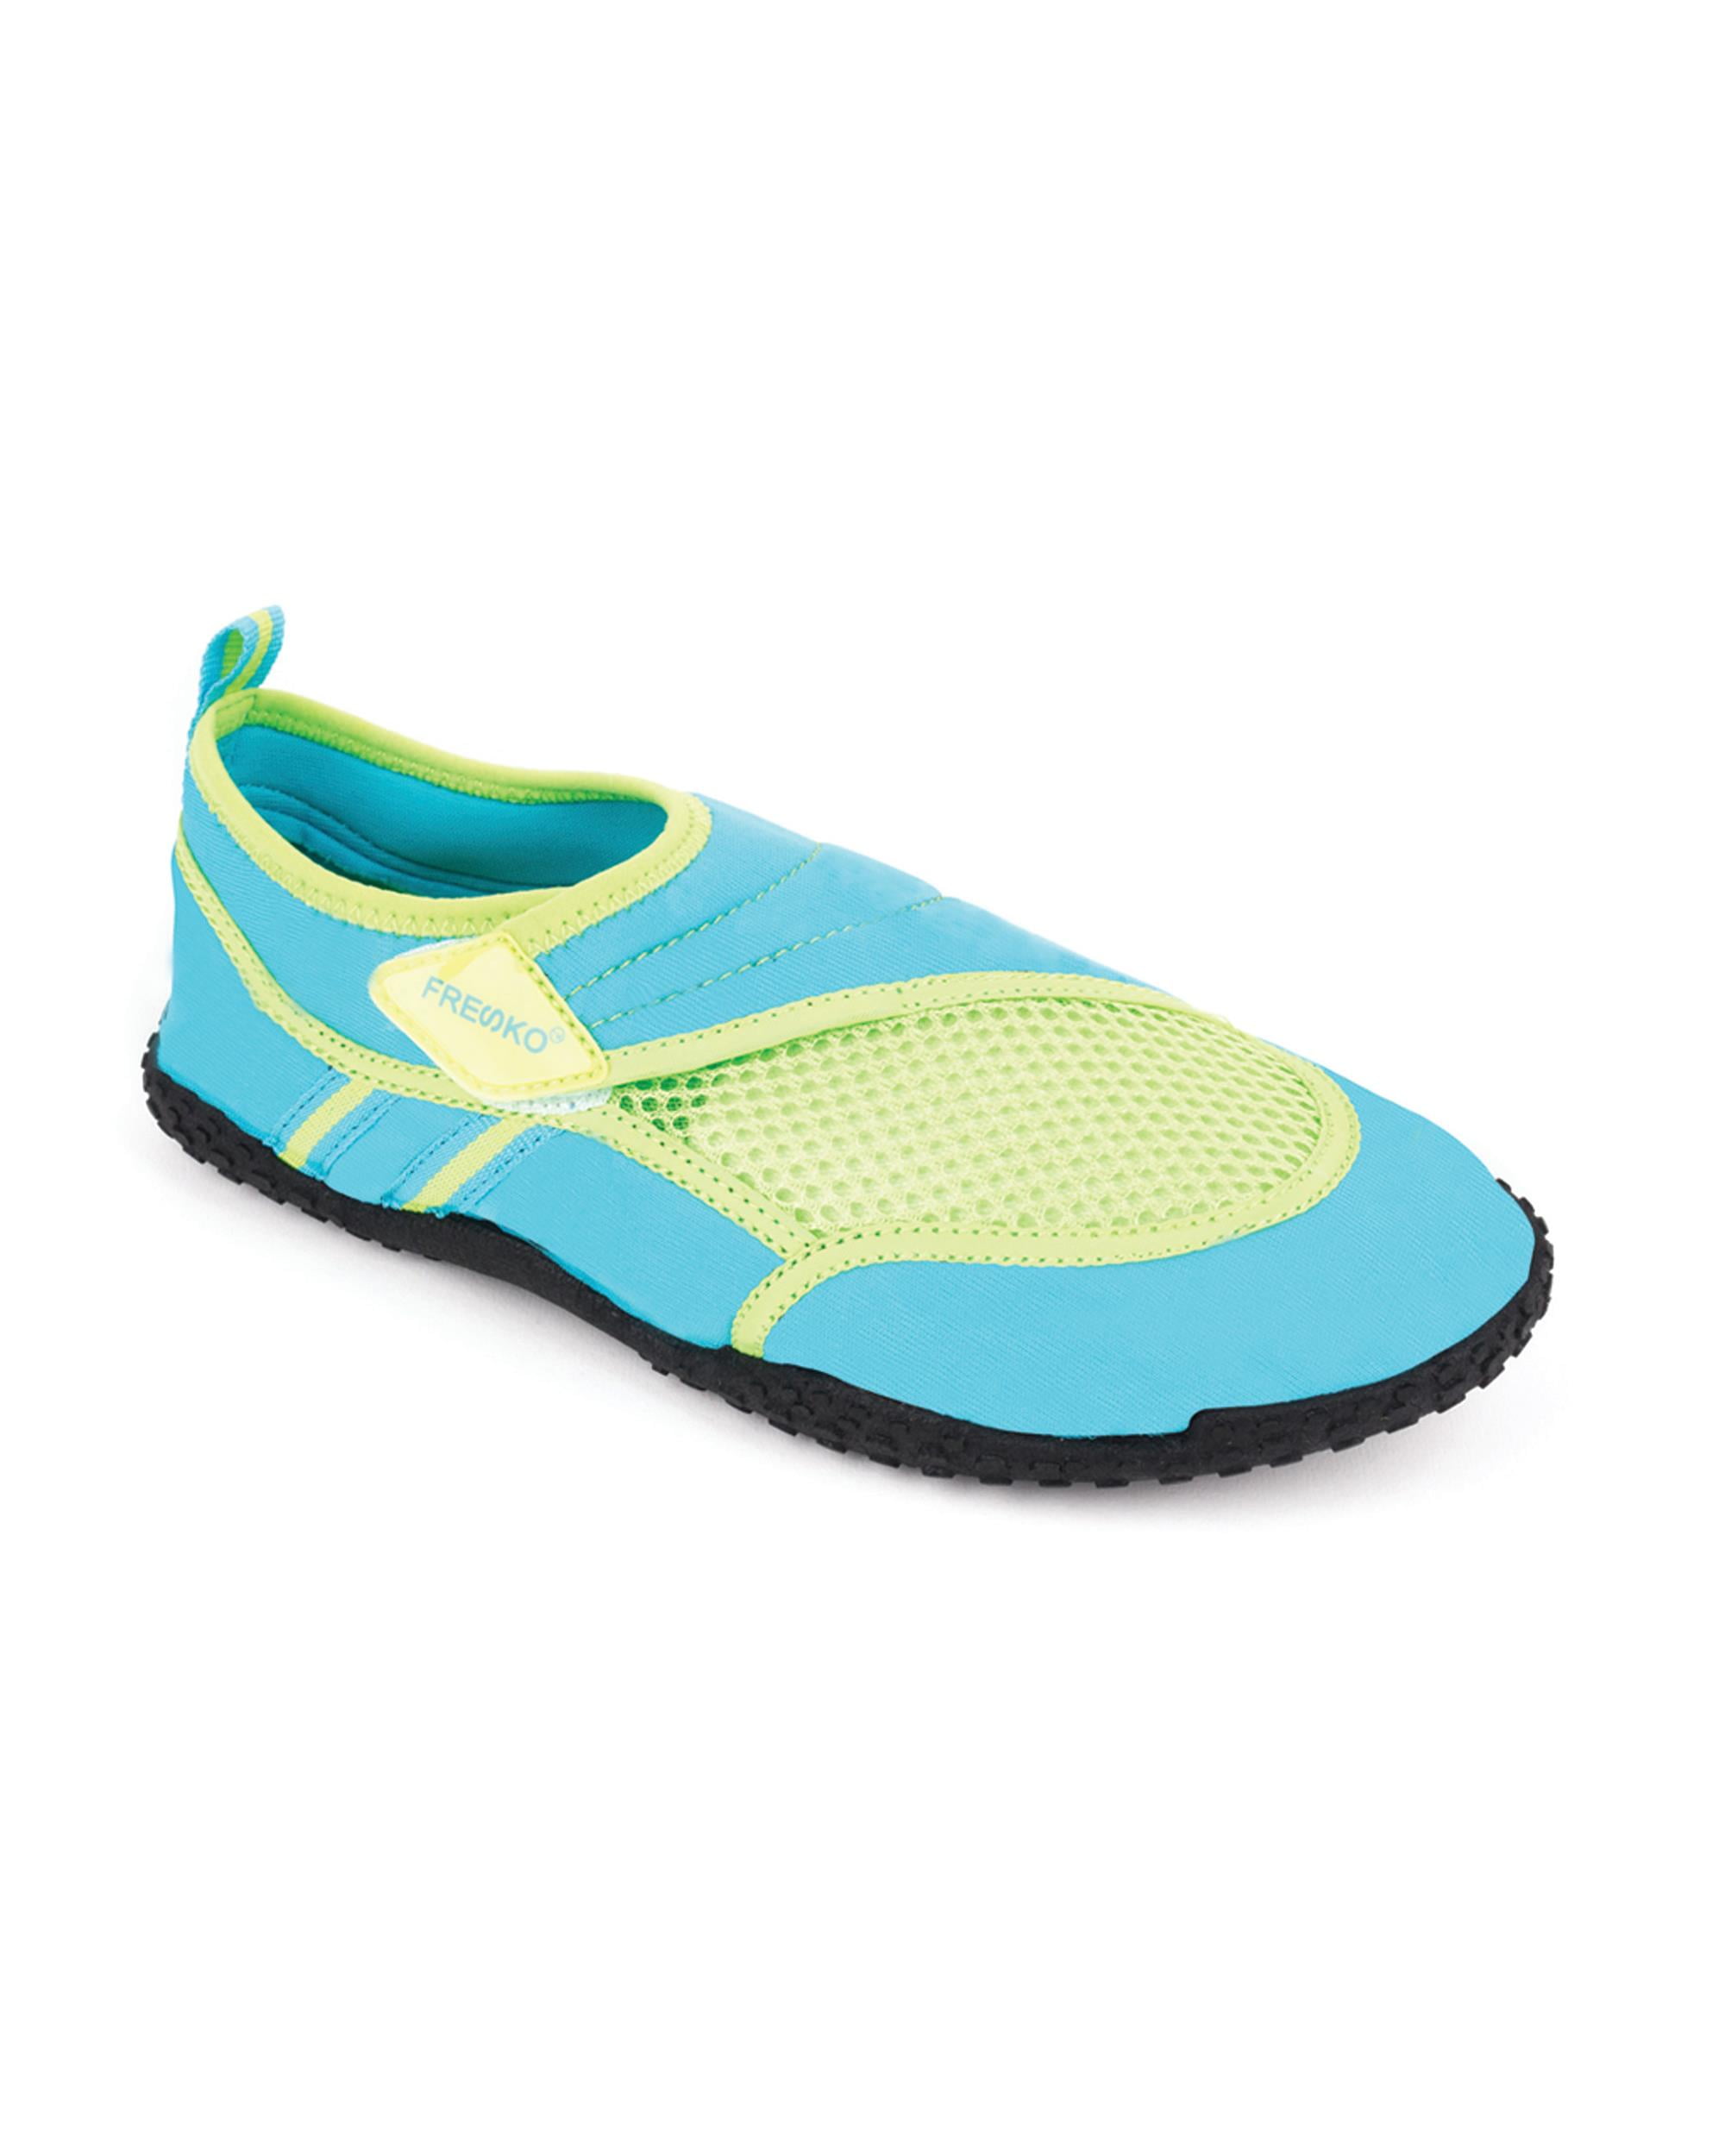 New Youth Boys Girls Slip On Water Shoes/Aqua Socks/Pool Beach 4-7 Sizes 